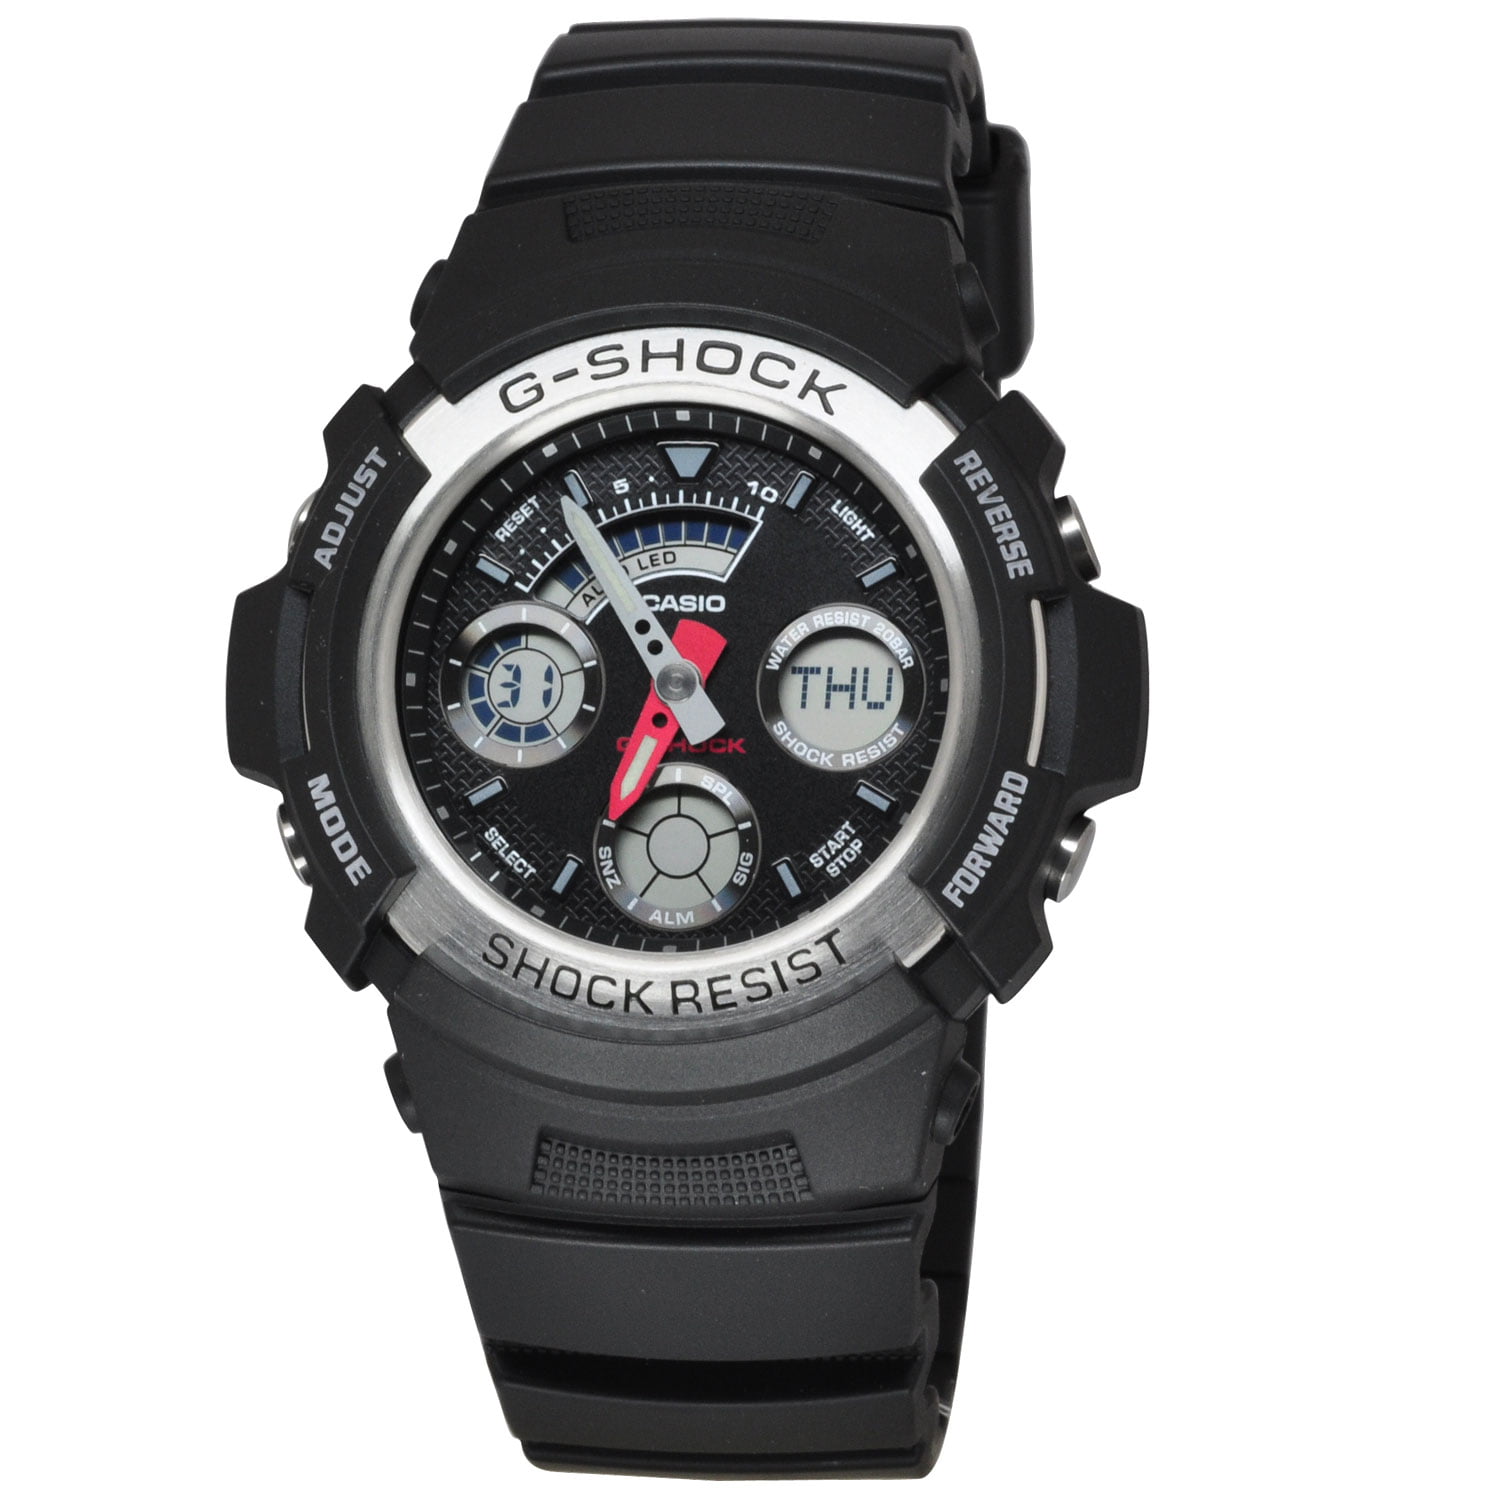 Casio G-Shock AW590-1A Watch